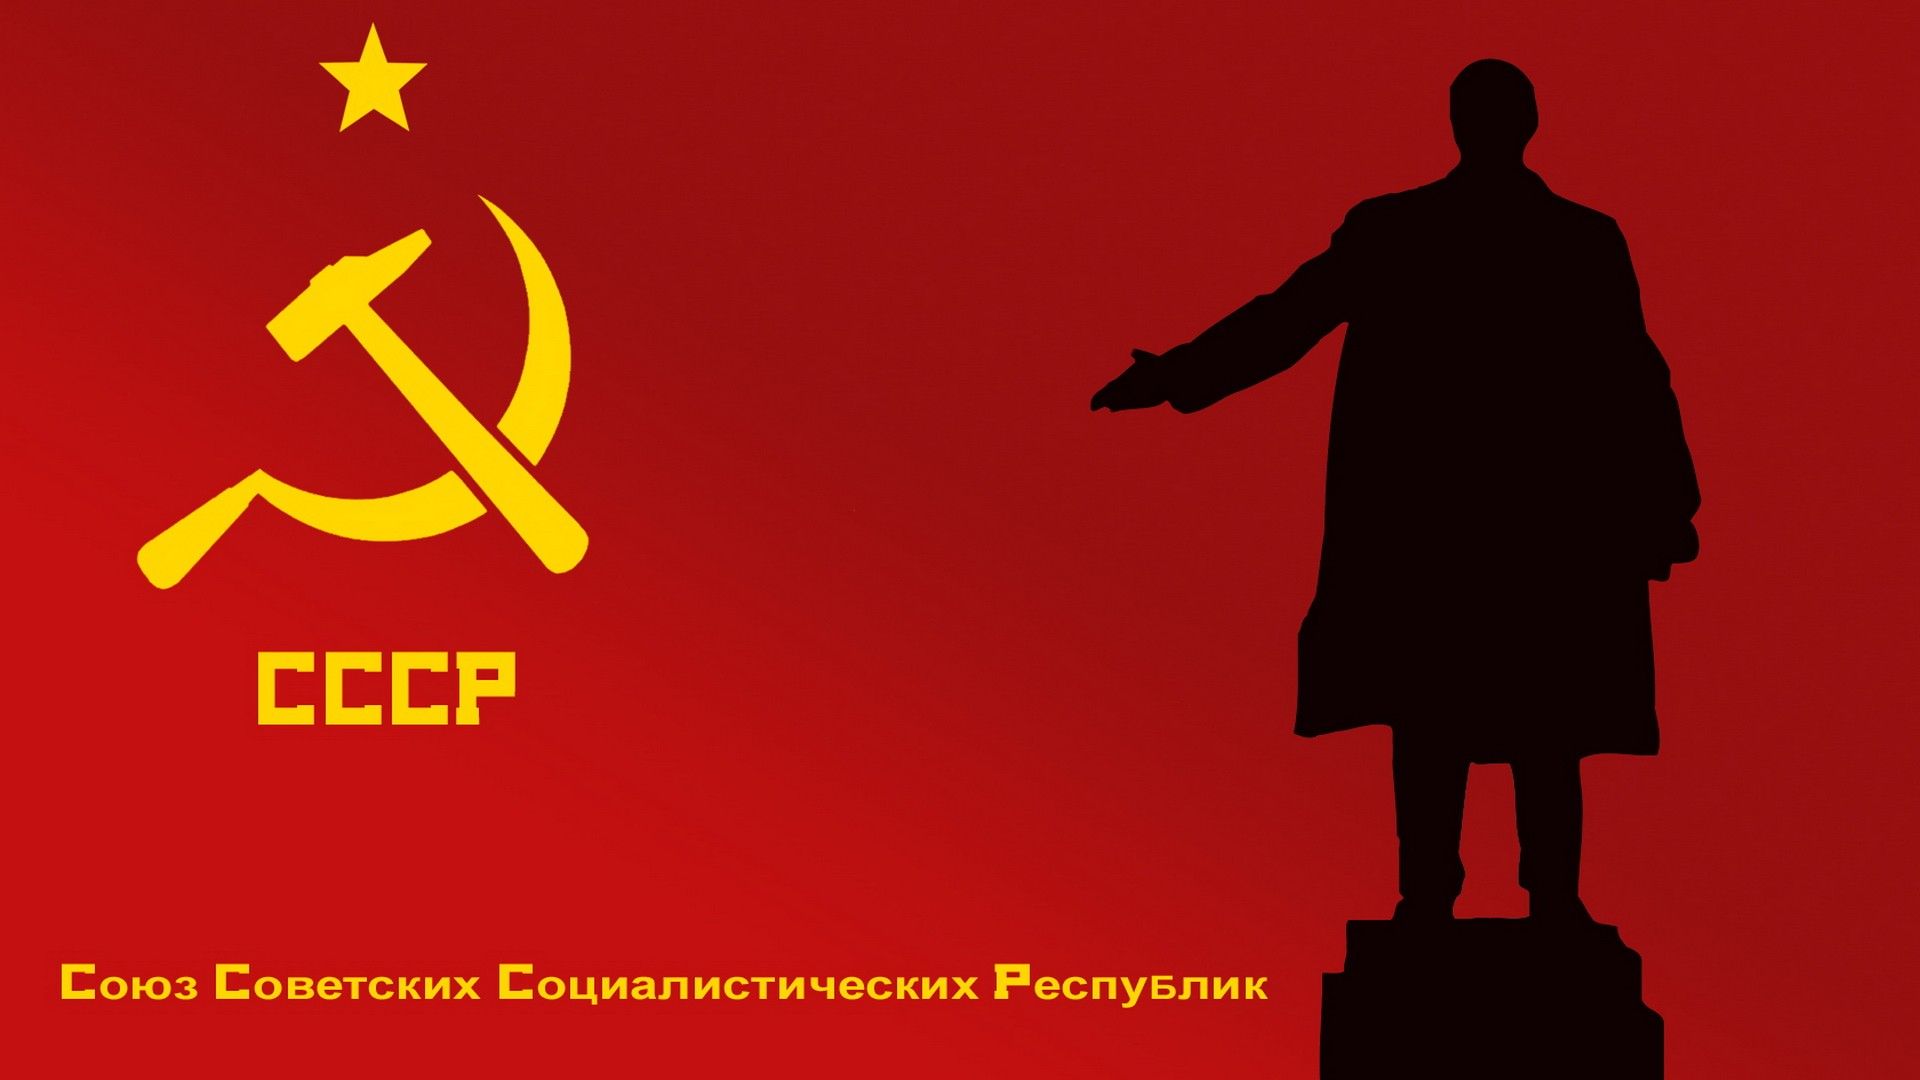 Free download Communism Wallpapers Communism Wallpapers 37 [1920x1080] for  your Desktop, Mobile & Tablet | Explore 76+ Socialist Wallpaper | Socialist  Wallpapers,